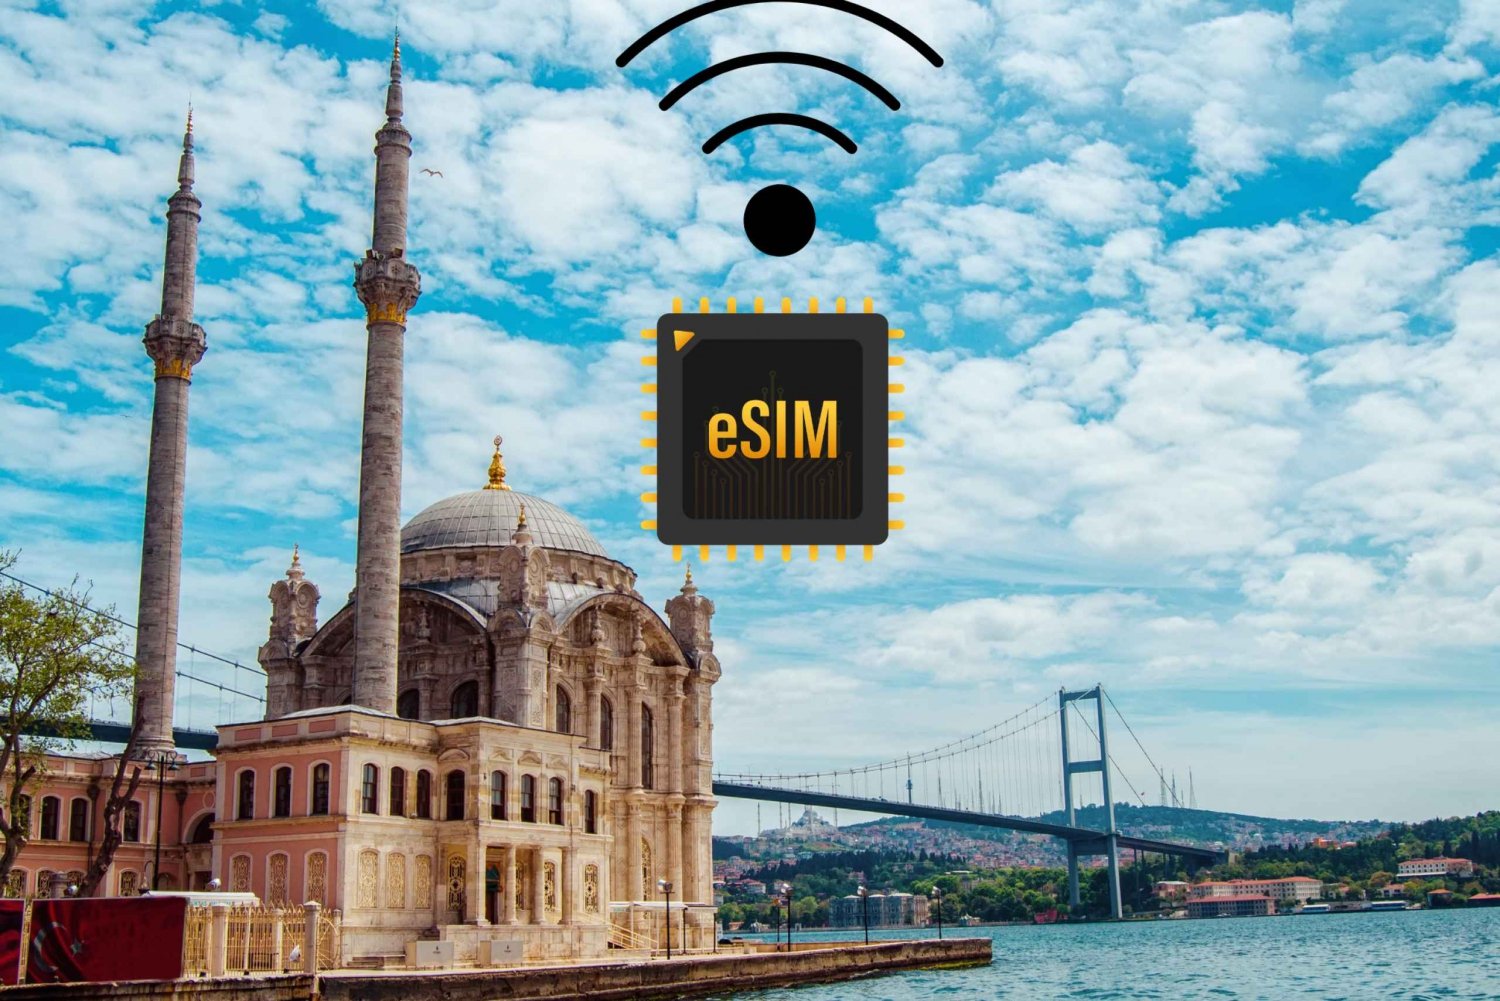 eSIM Tyrkiet: Internet dataplan med høj hastighed 4G/5G